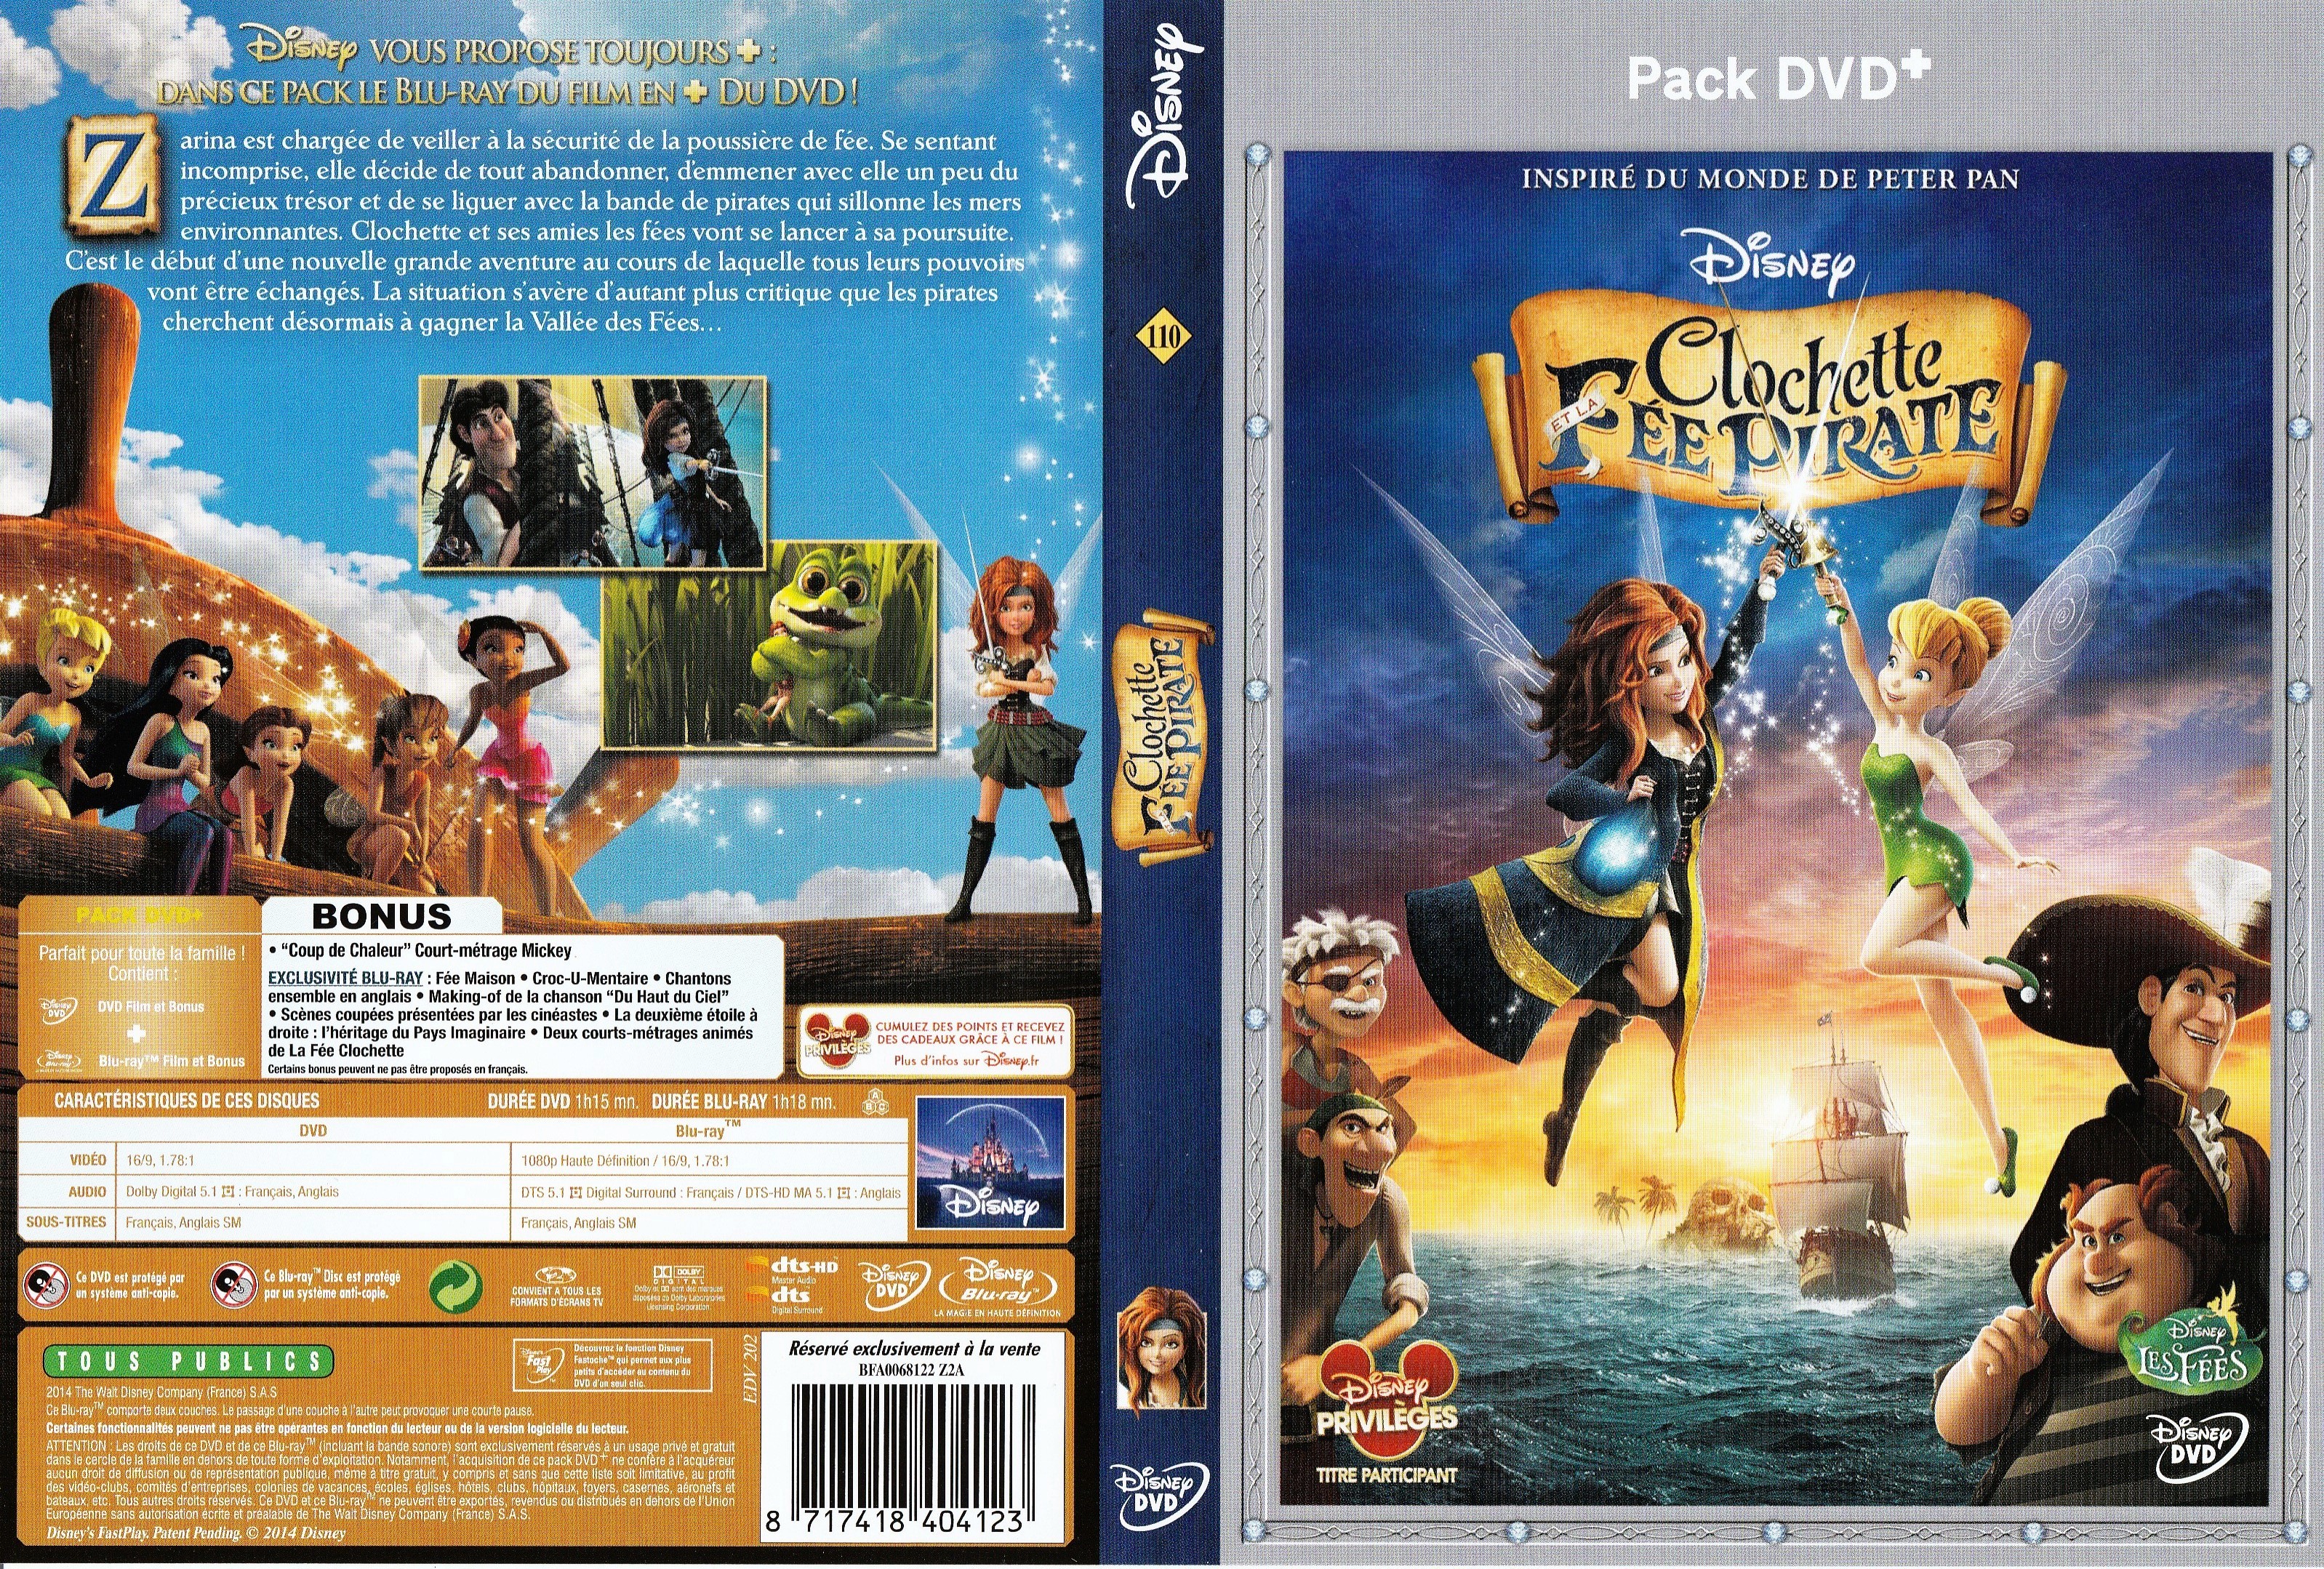 Jaquette DVD Clochette et la fe pirate